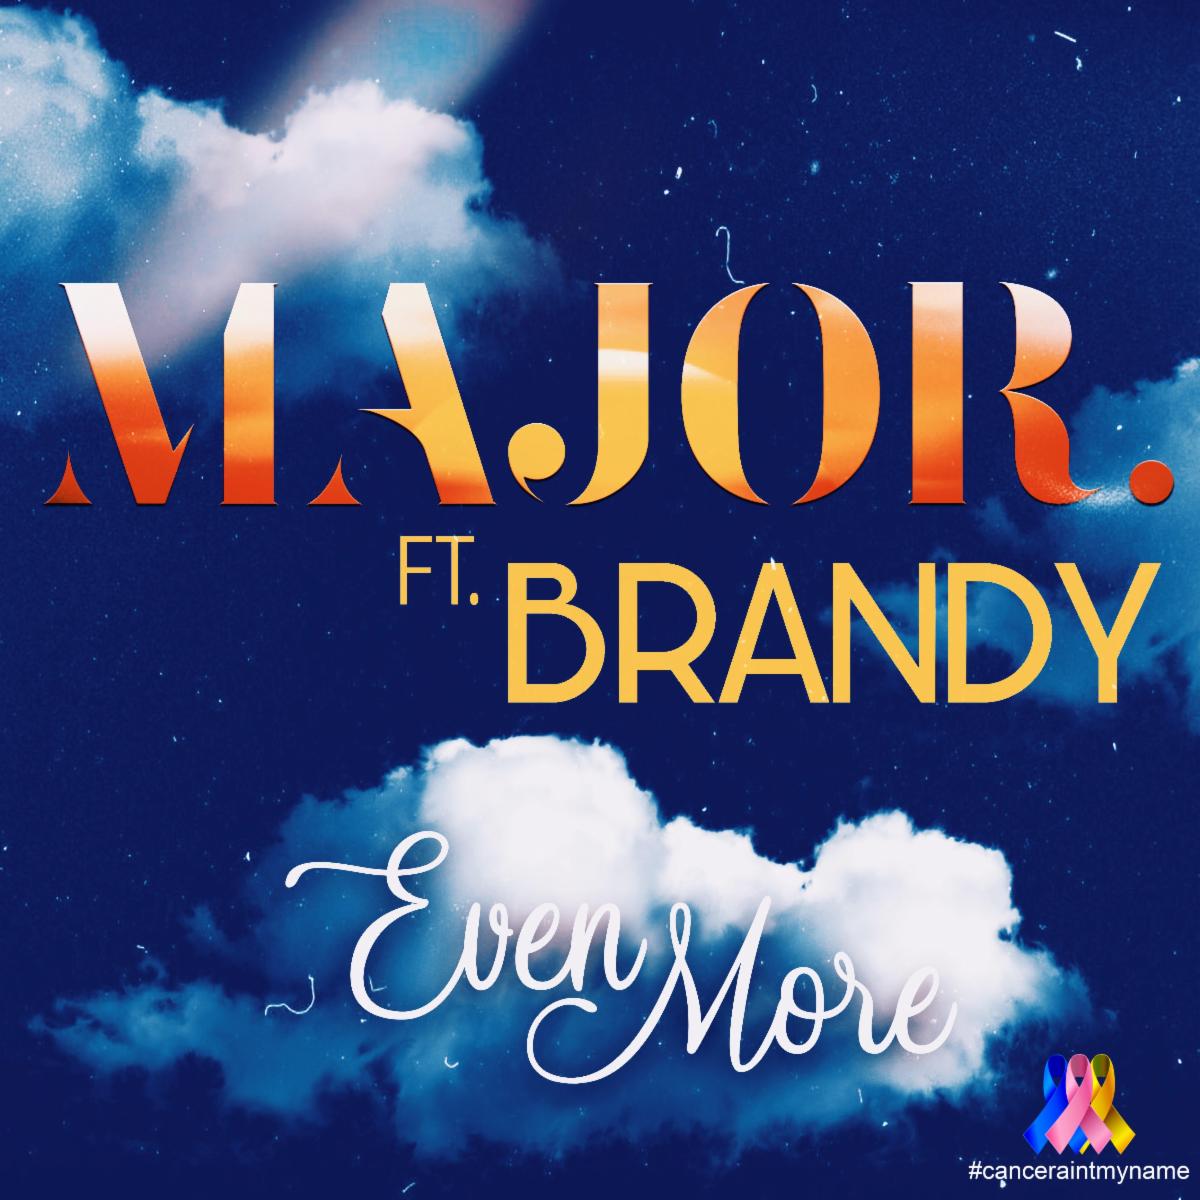 Brandy & MAJOR. Release Song “Ever More” to Benefit Cancer Survivors